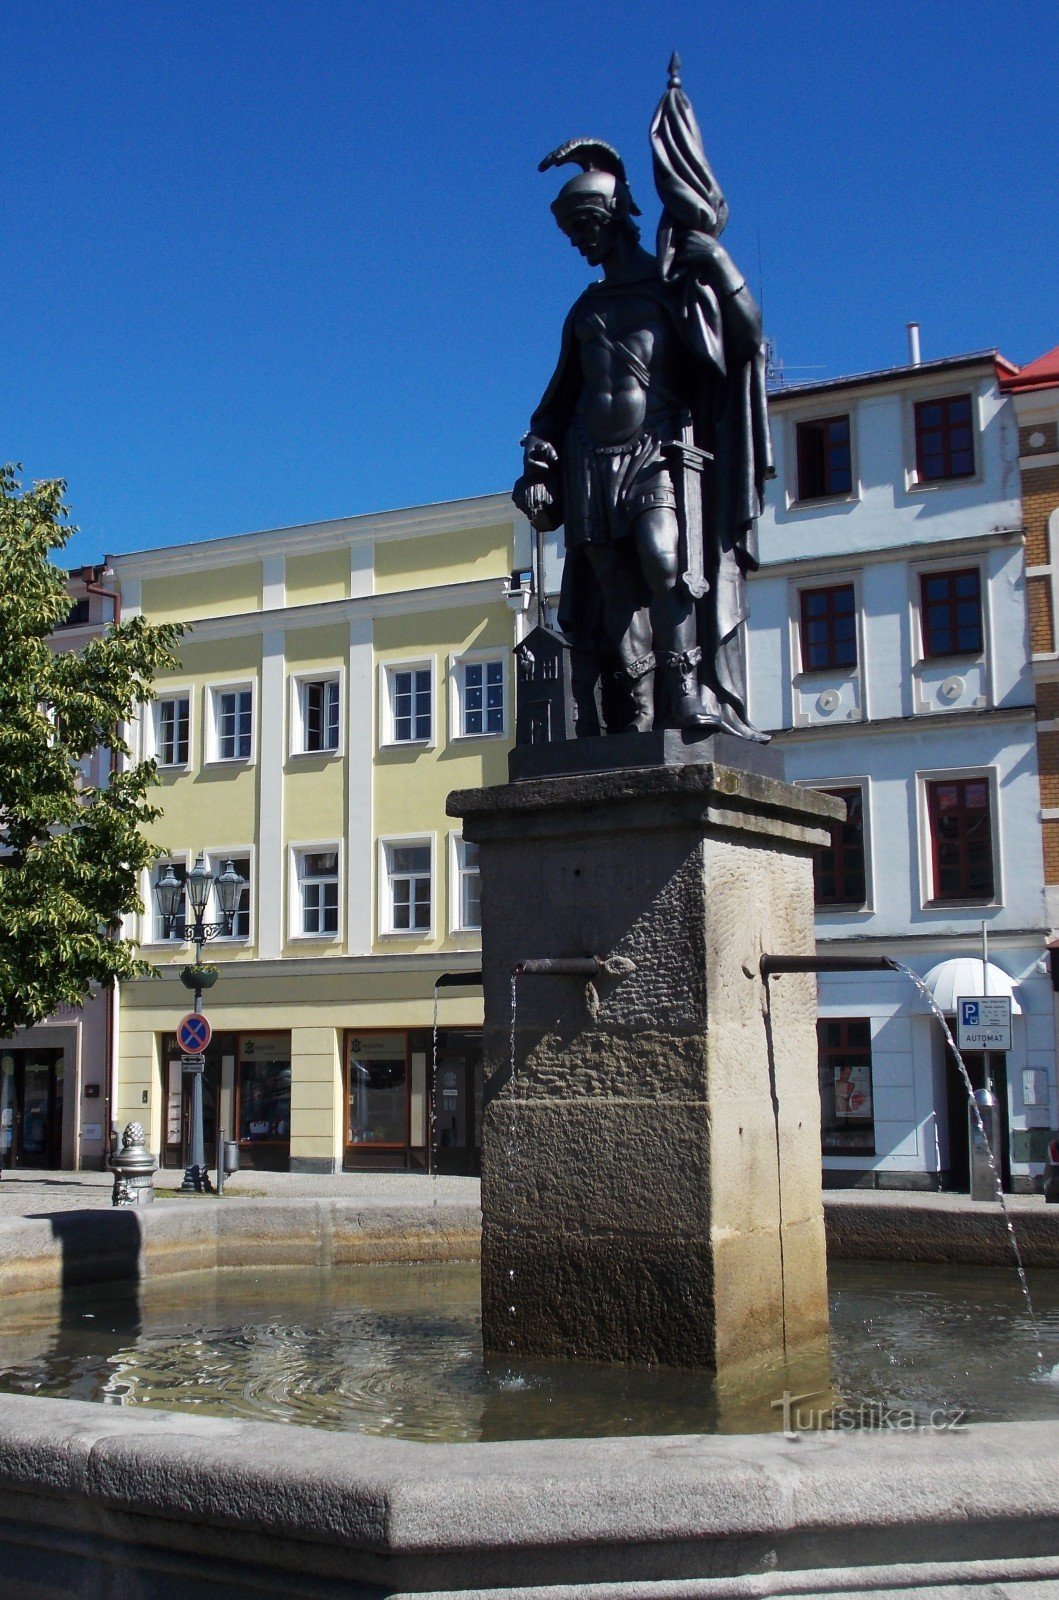 The fountain on the Castle Square in Frýdek - Místek